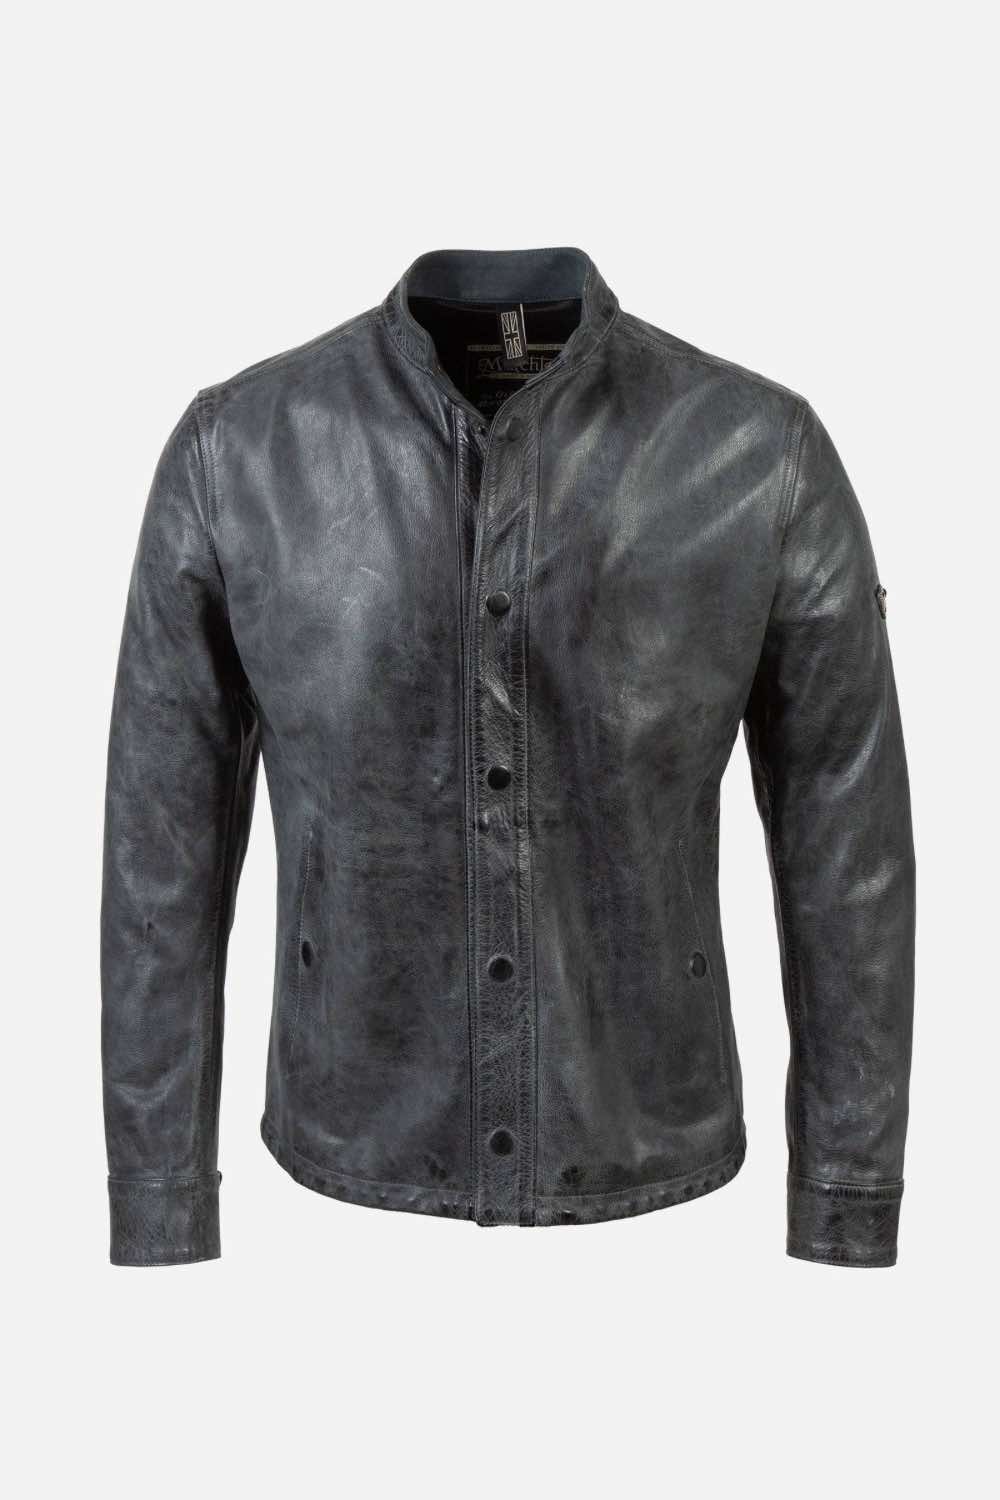 Matchless Shoreditch Shirt Men's Leather Jacket Antique Black - Front View